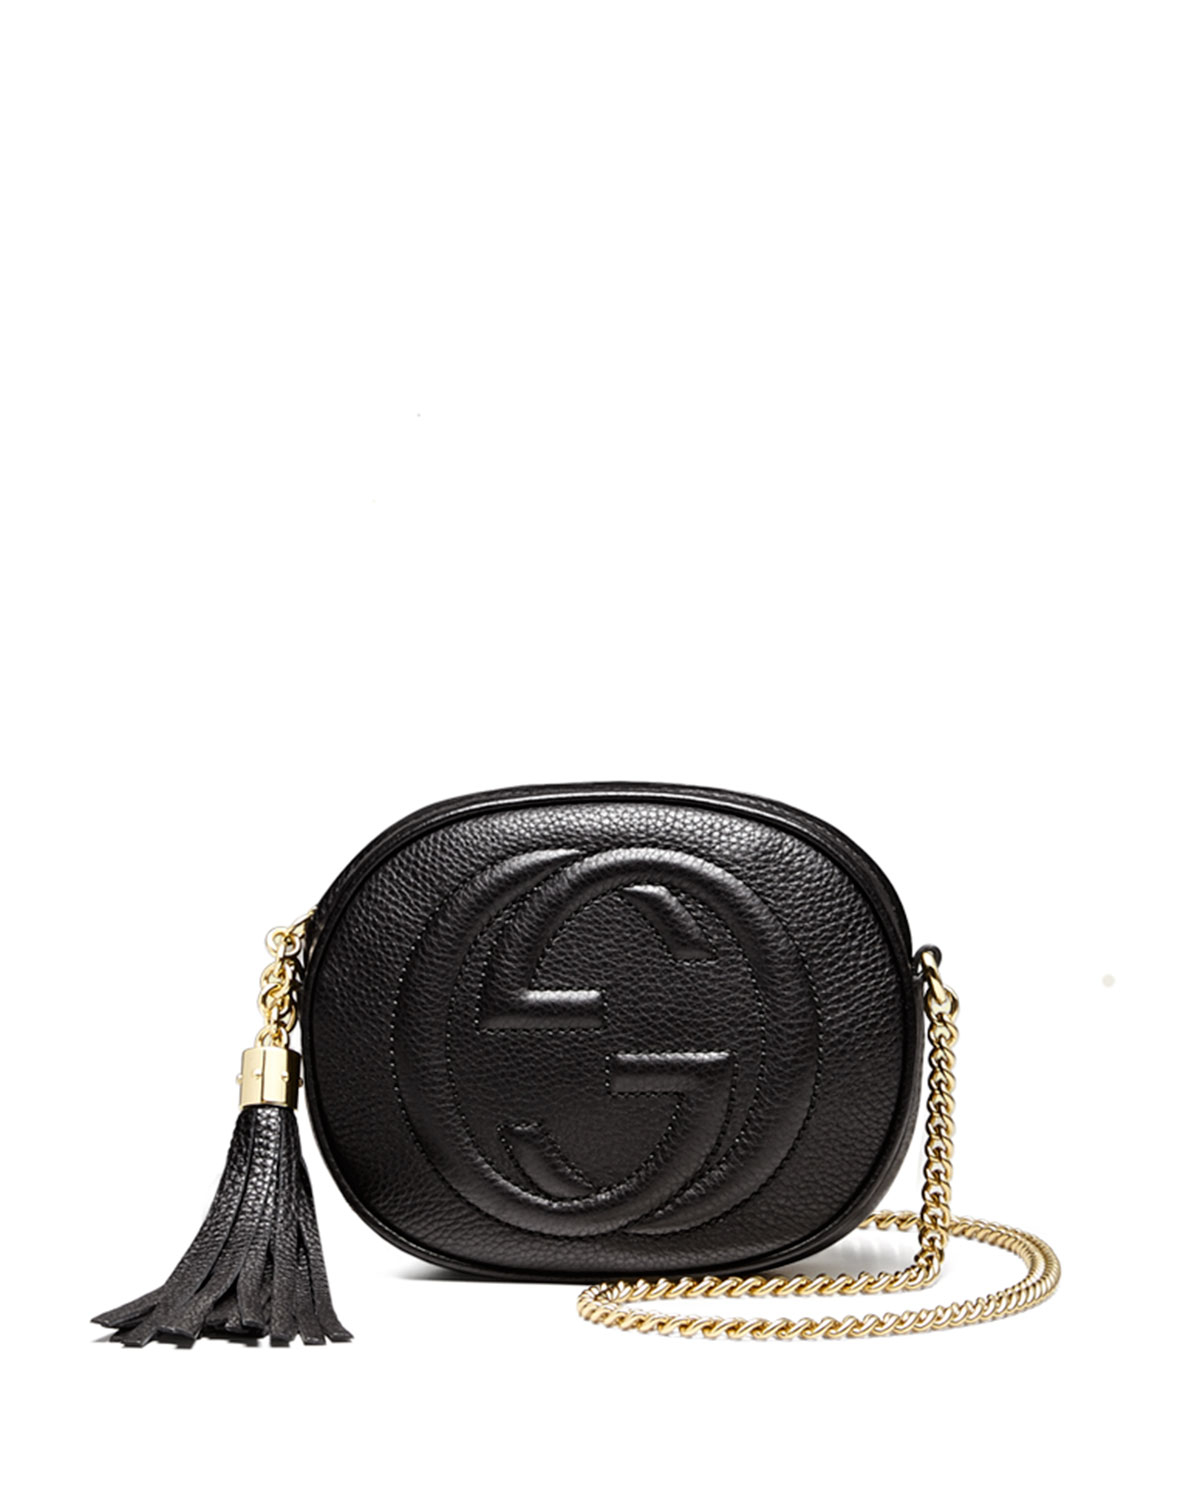 Gucci Soho Leather Mini Chain Bag in Black | Lyst